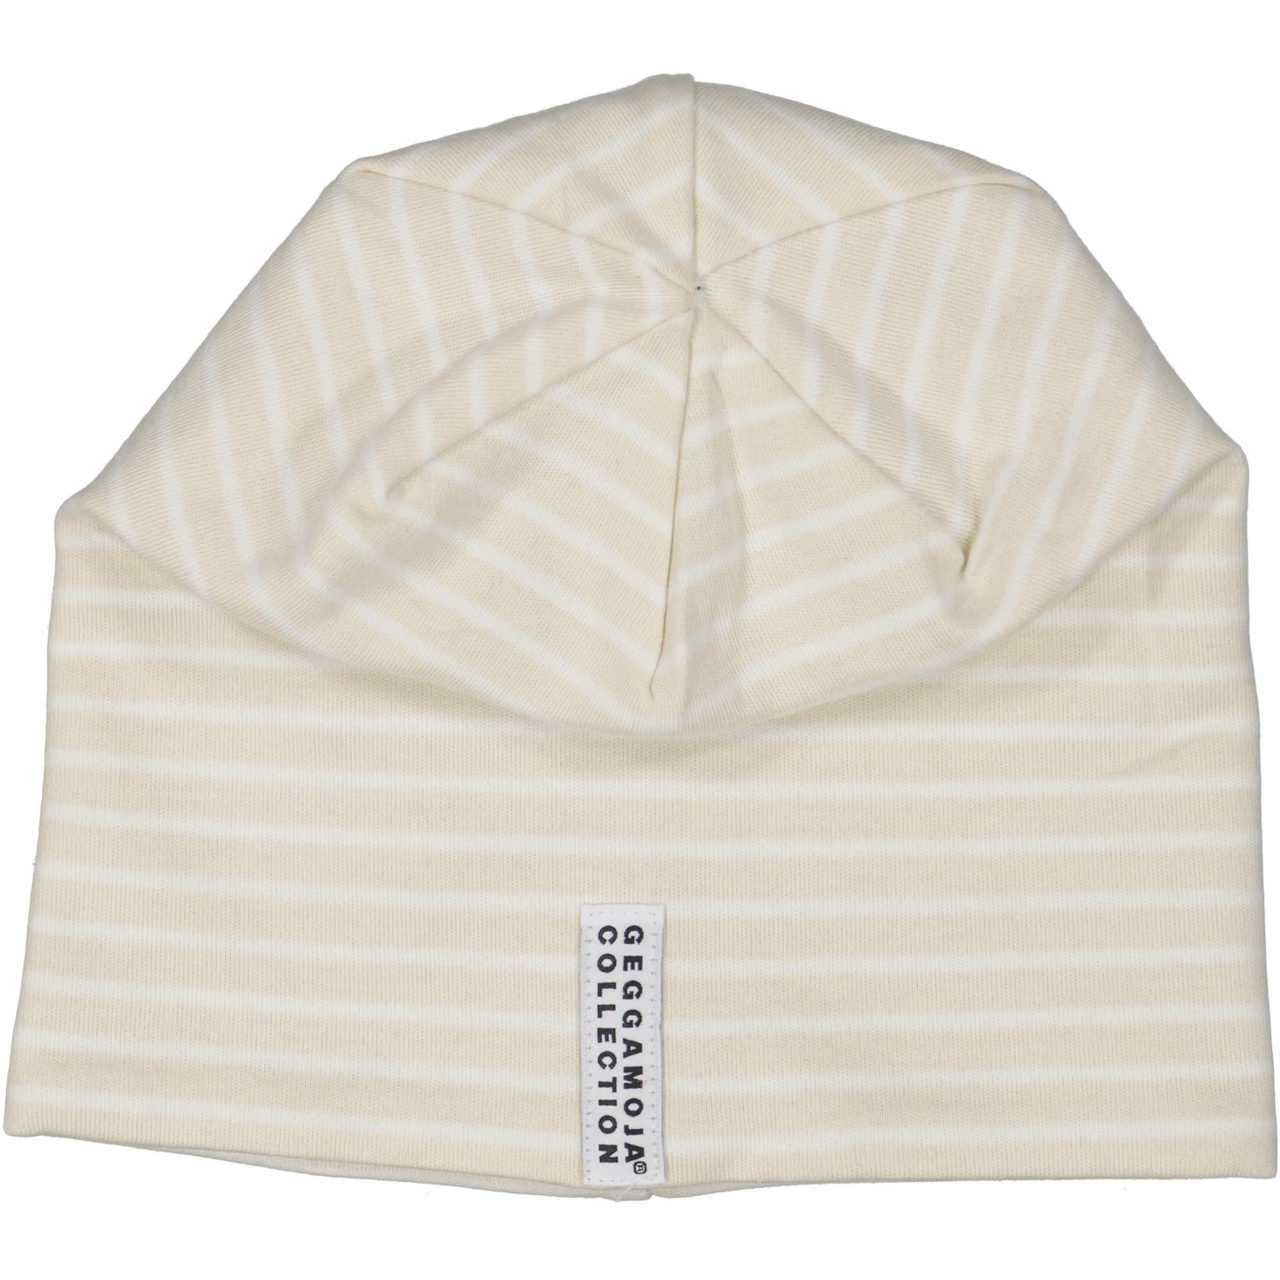 Topline fleece cap Beige/whiteM 5-6 Year